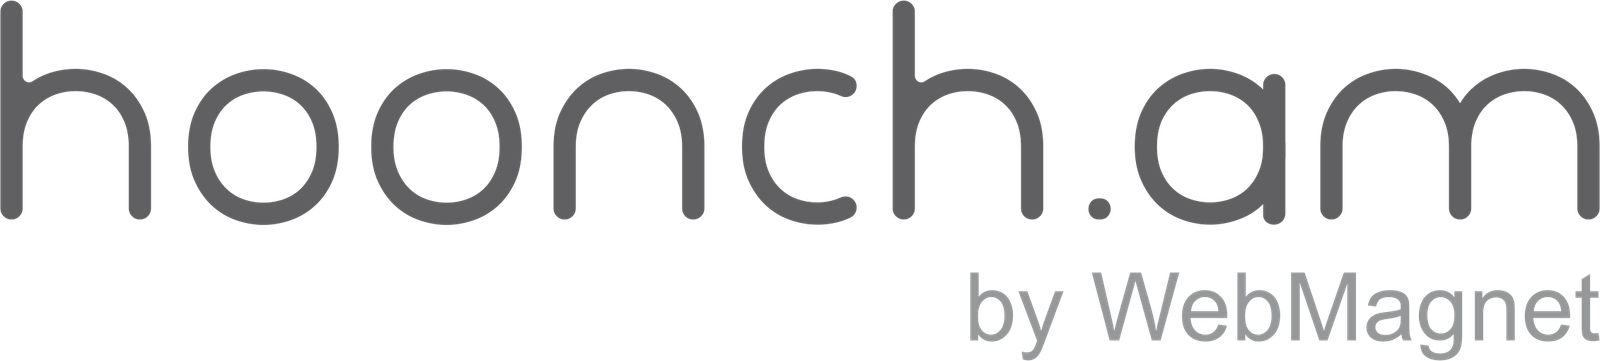 hoonch.am logo